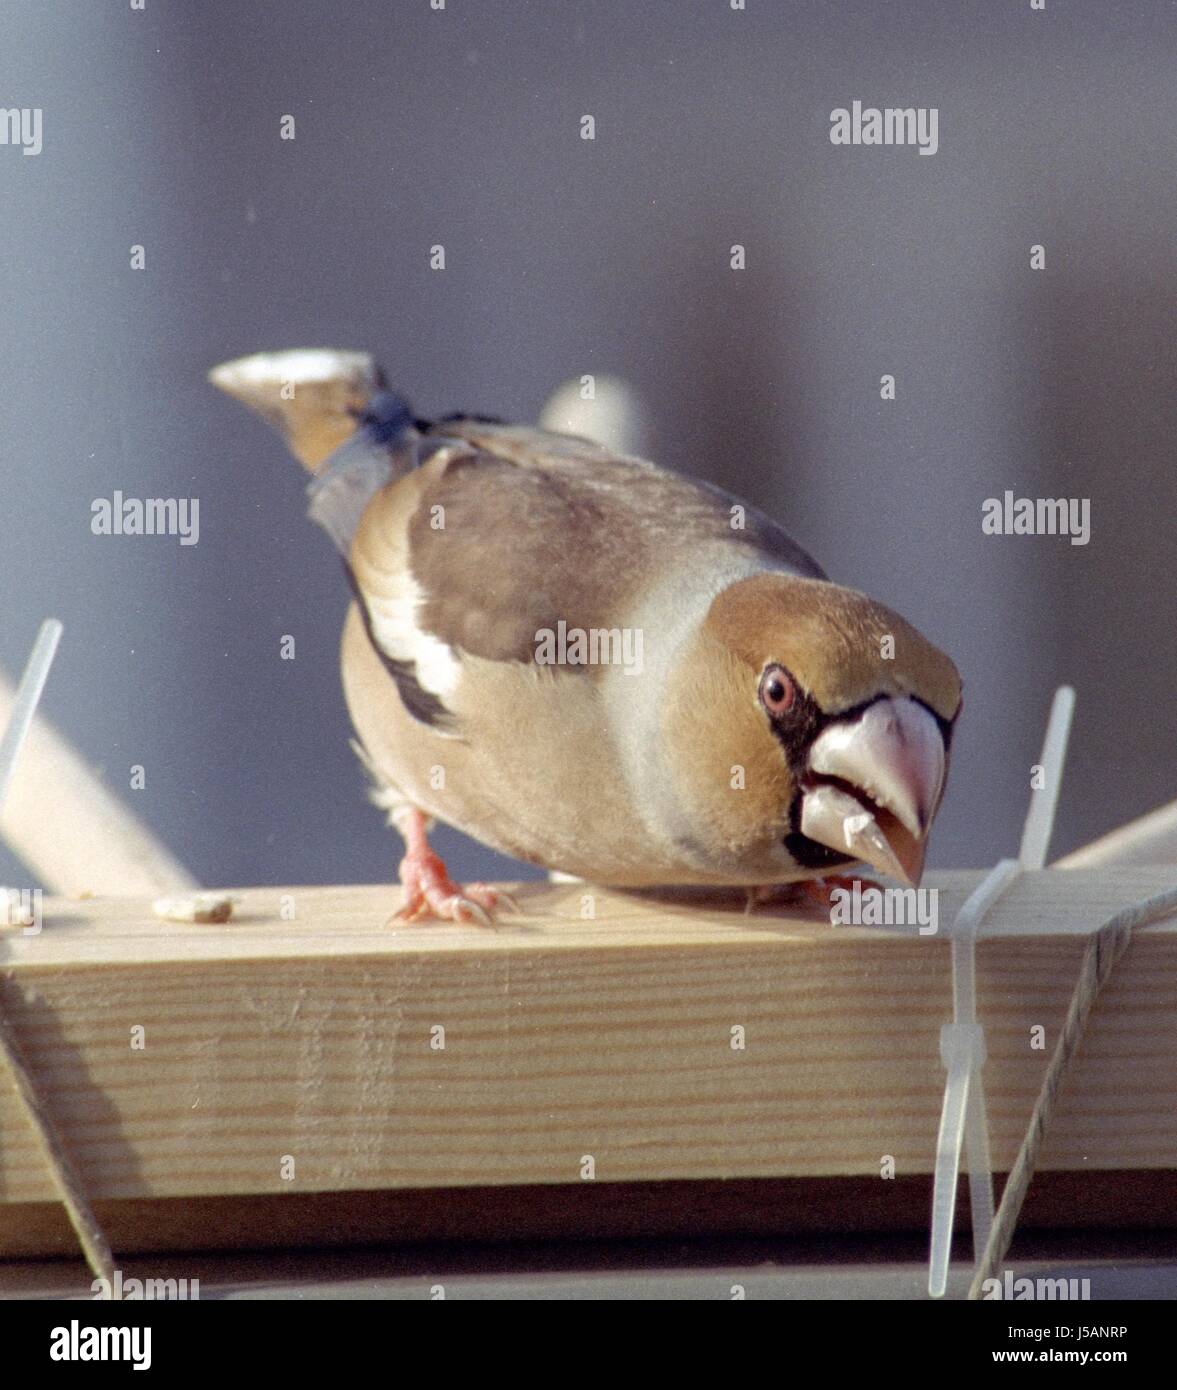 Einheimischer singvogel hi-res stock photography and images - Alamy